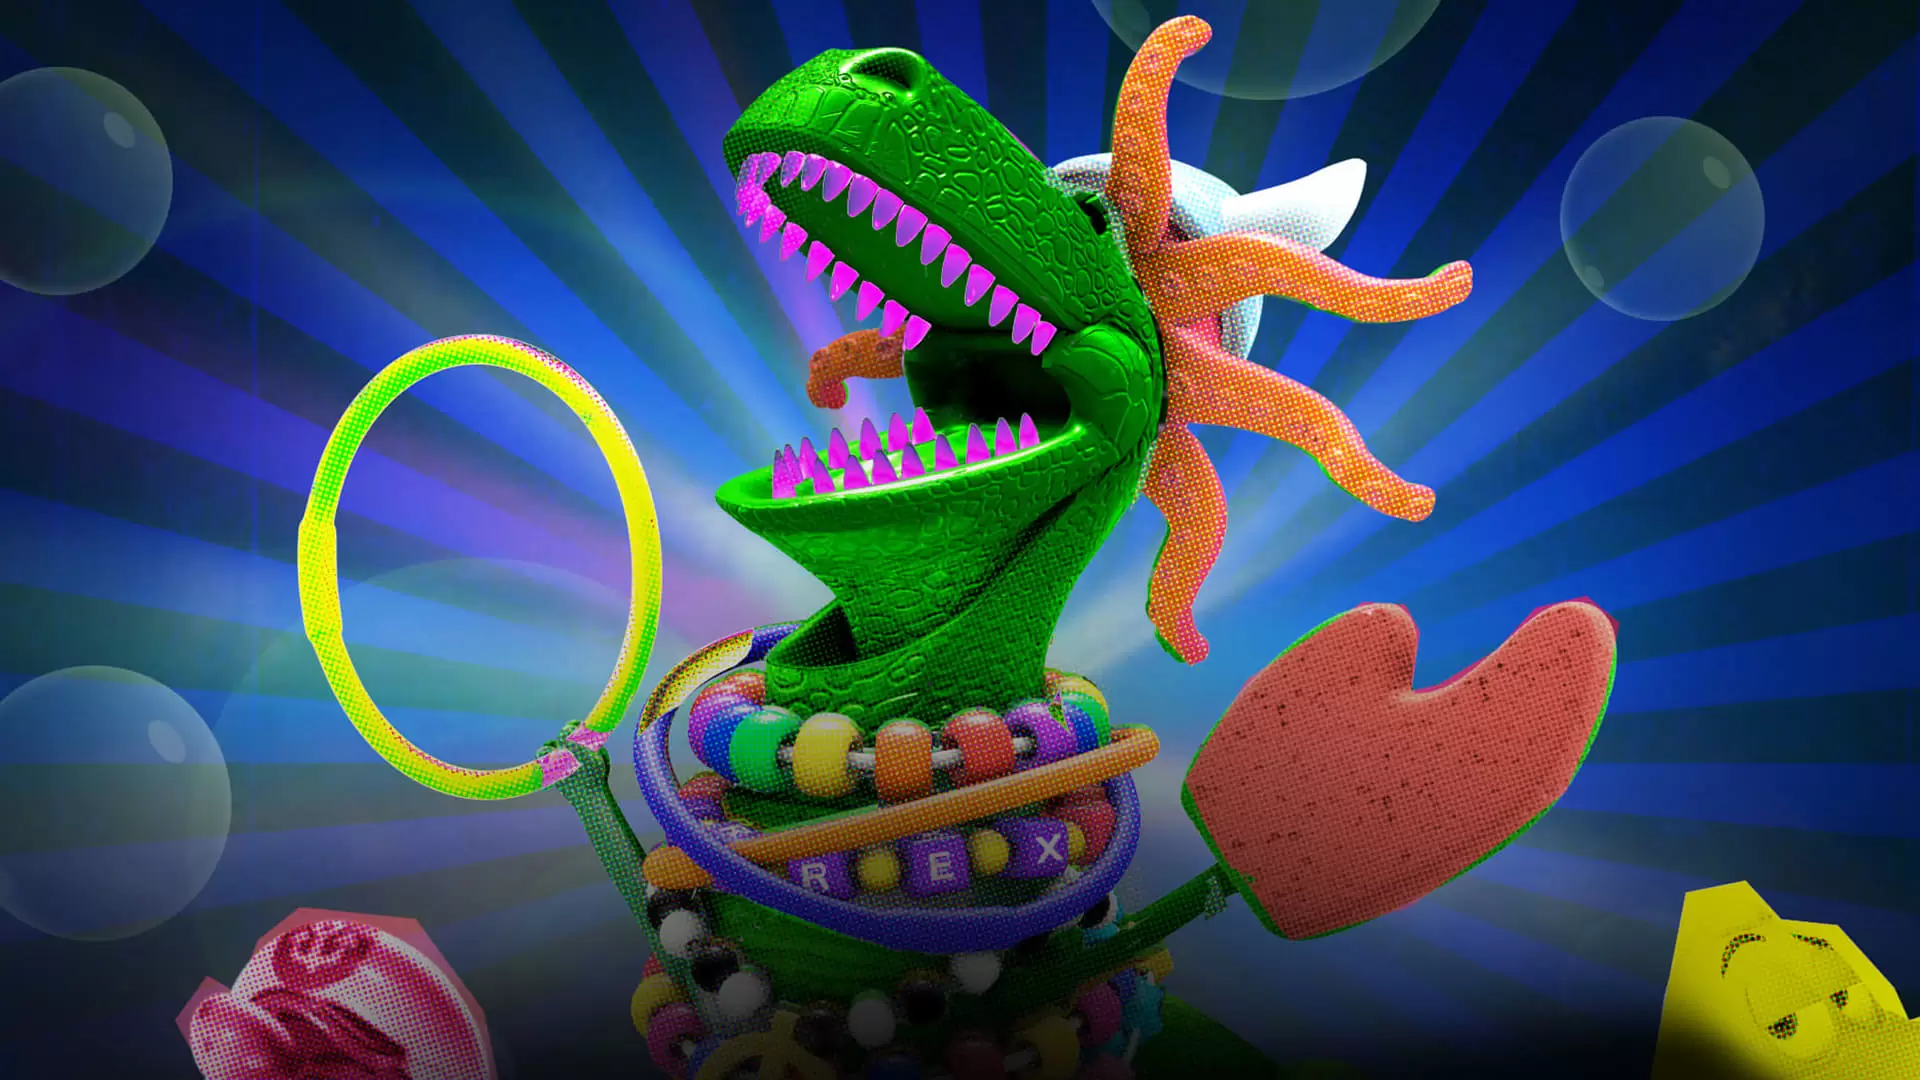 دانلود انیمیشن Toy Story Toons: Partysaurus Rex 2012 (رکس پارتی جور کن) با زیرنویس فارسی